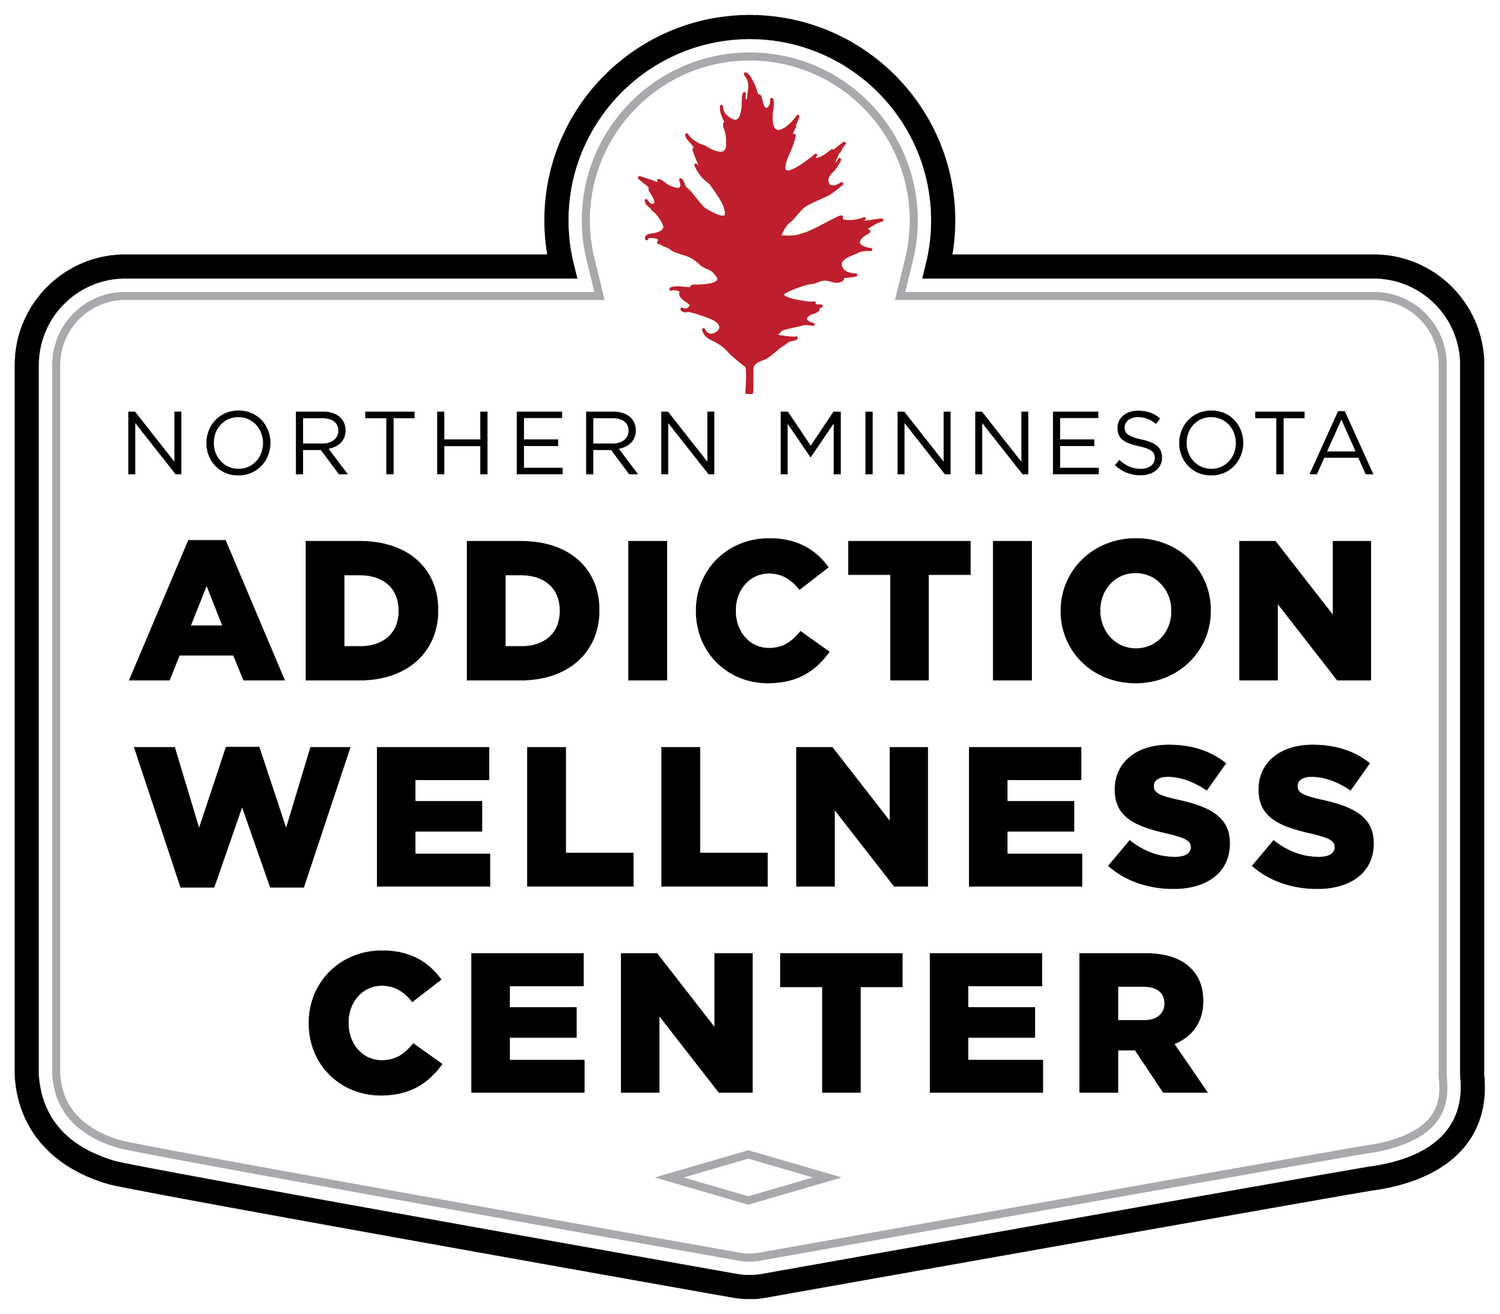 Northern Minnesota Addiction Wellness Center